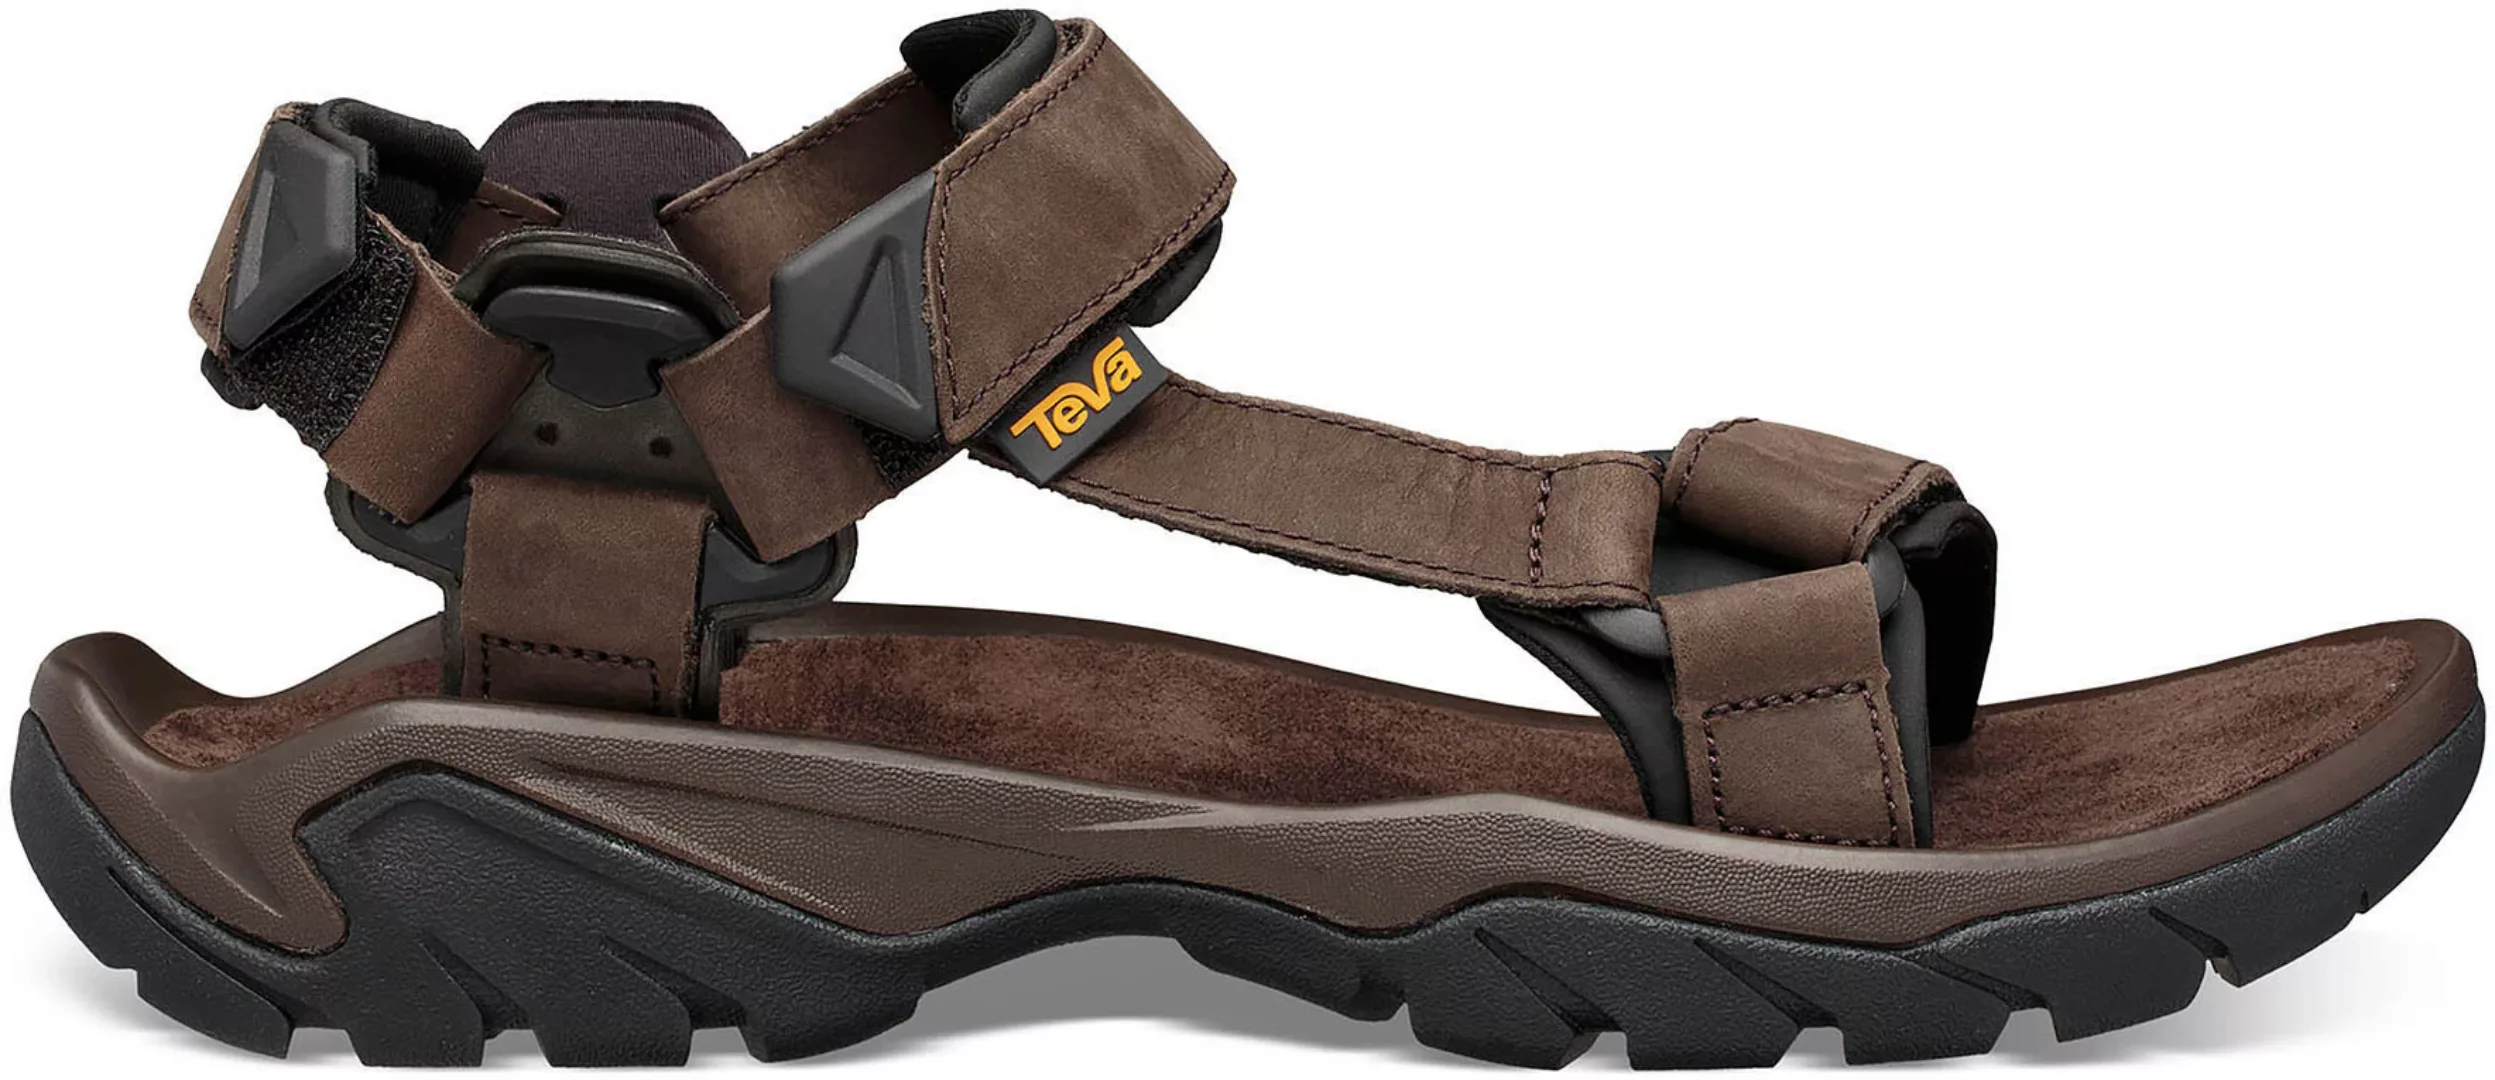 Teva Sandale "Terra Fi 5 Universal Leather Mens" günstig online kaufen